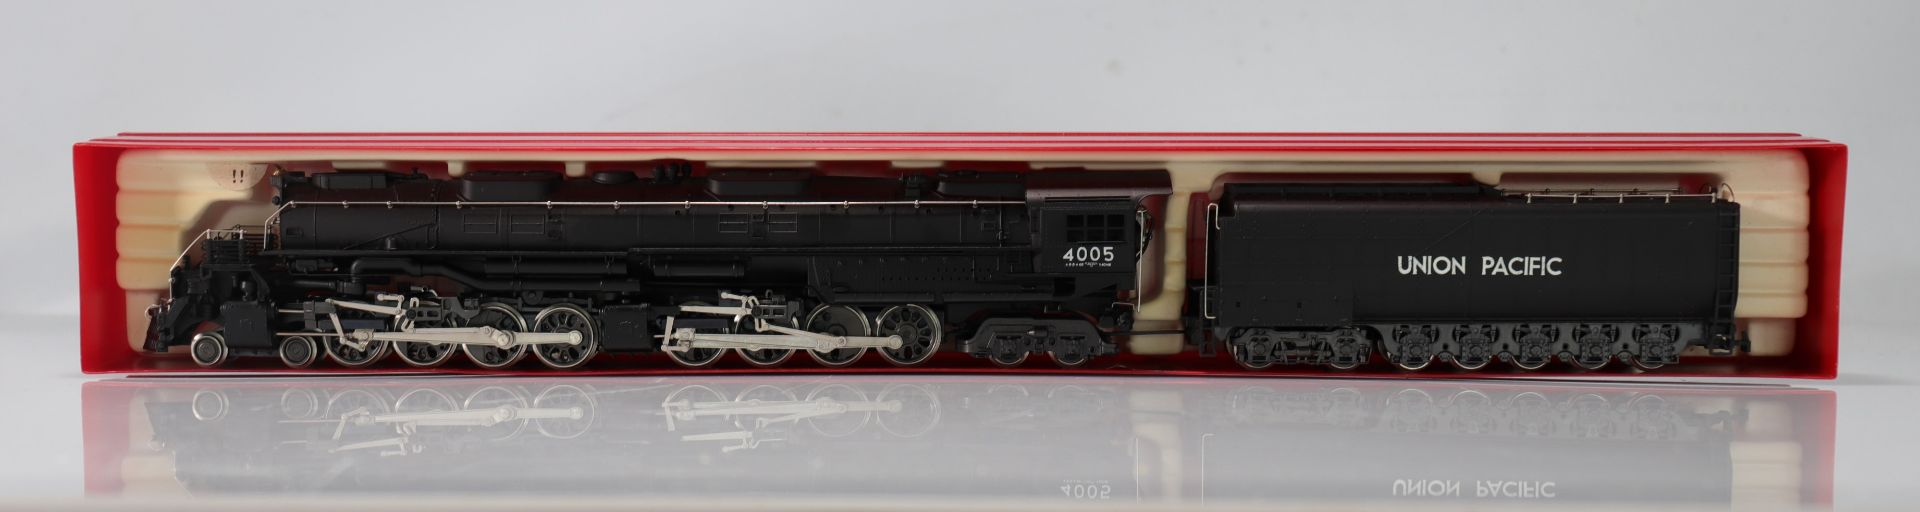 Rivarossi locomotive / Reference: 1254 / Type: locomotive 4-8-8-4 Big Boy